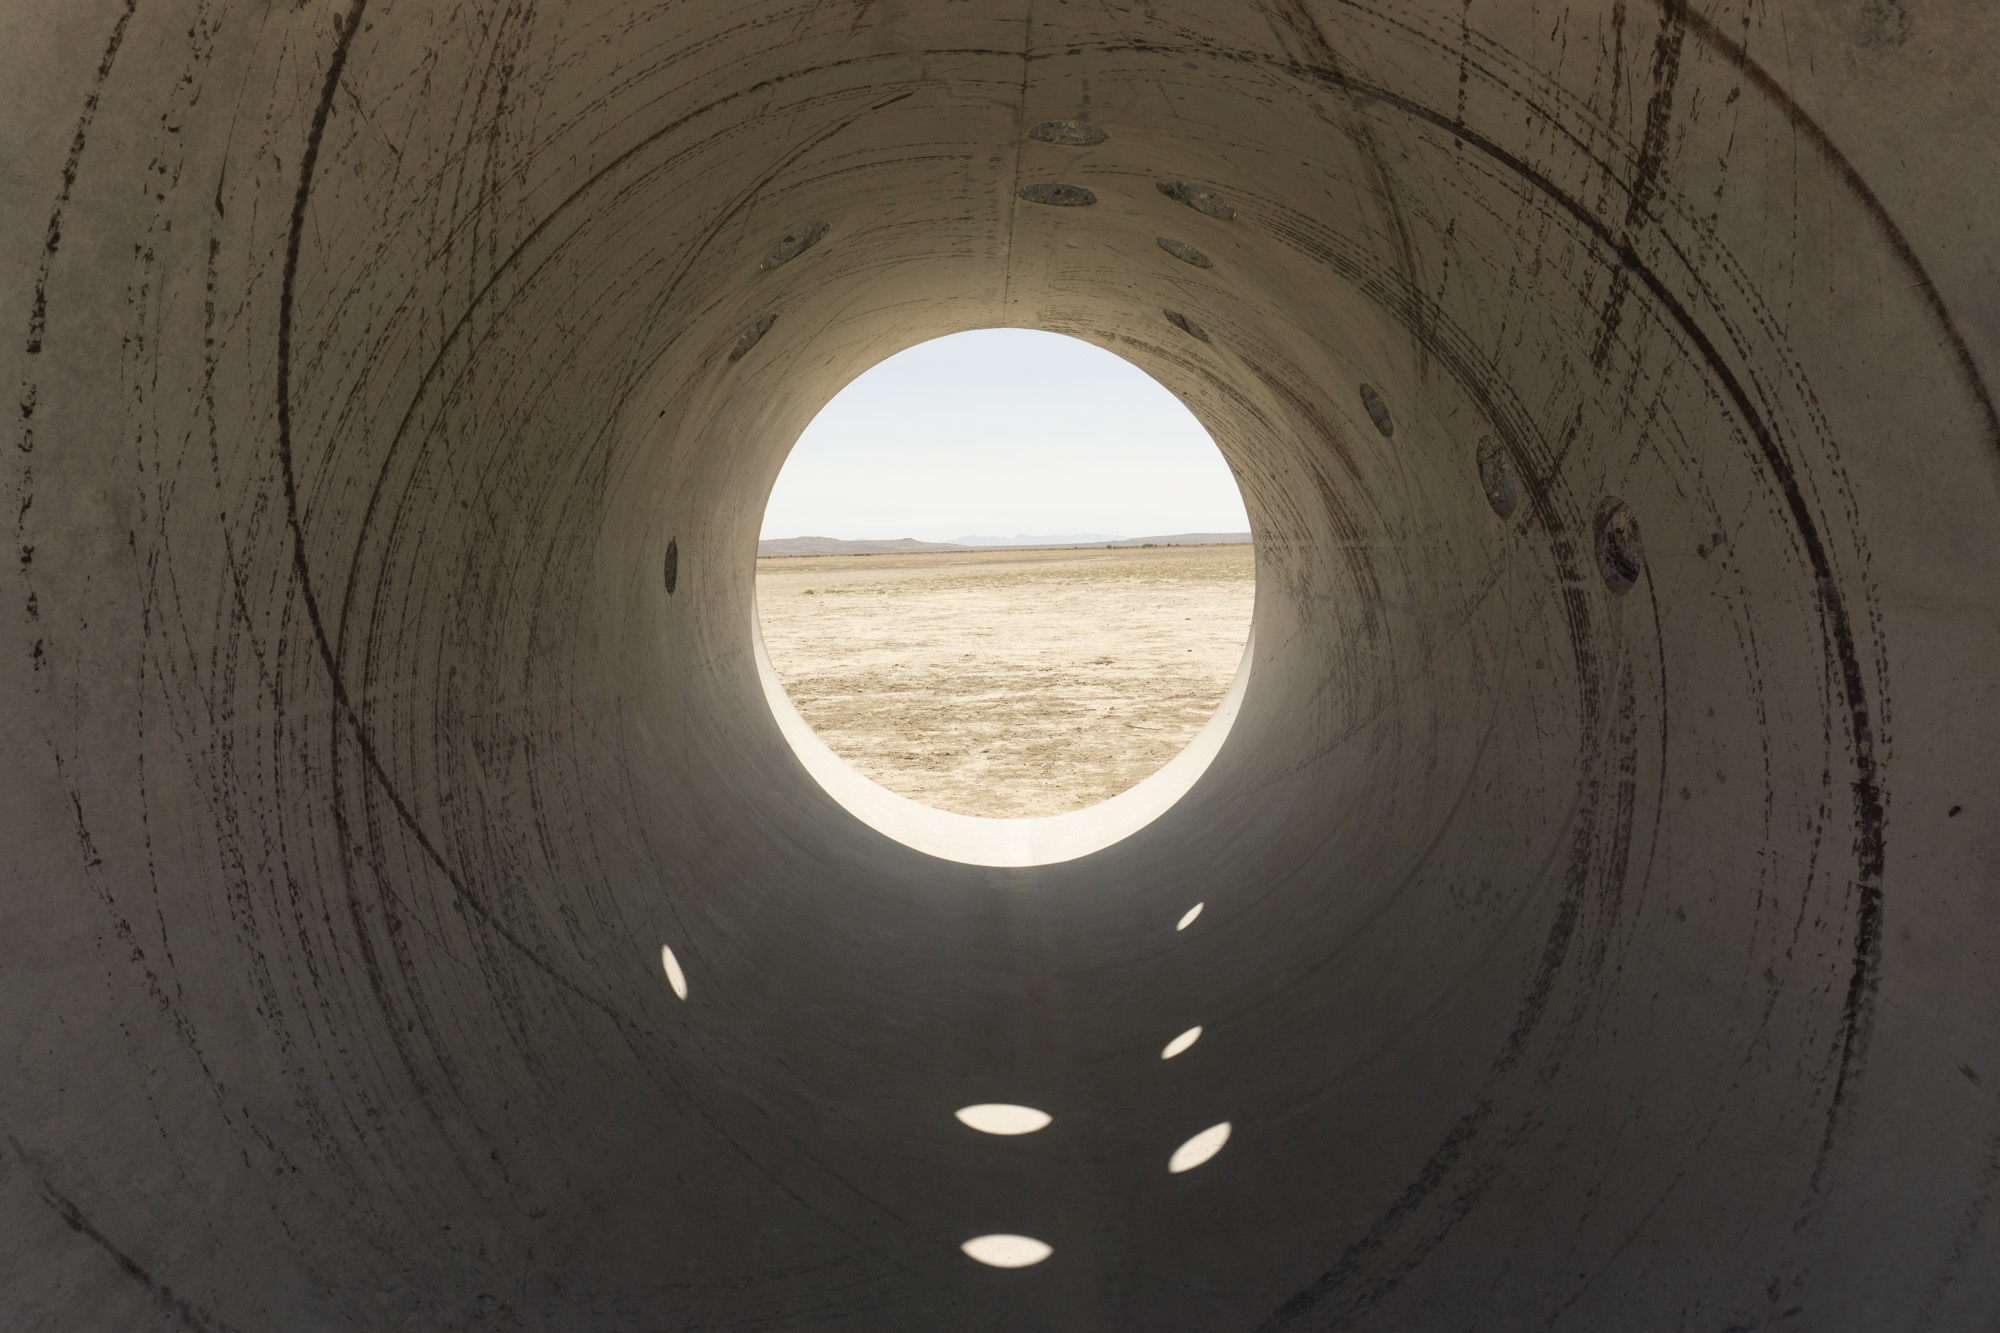 Sun Tunnels by Nancy Holt